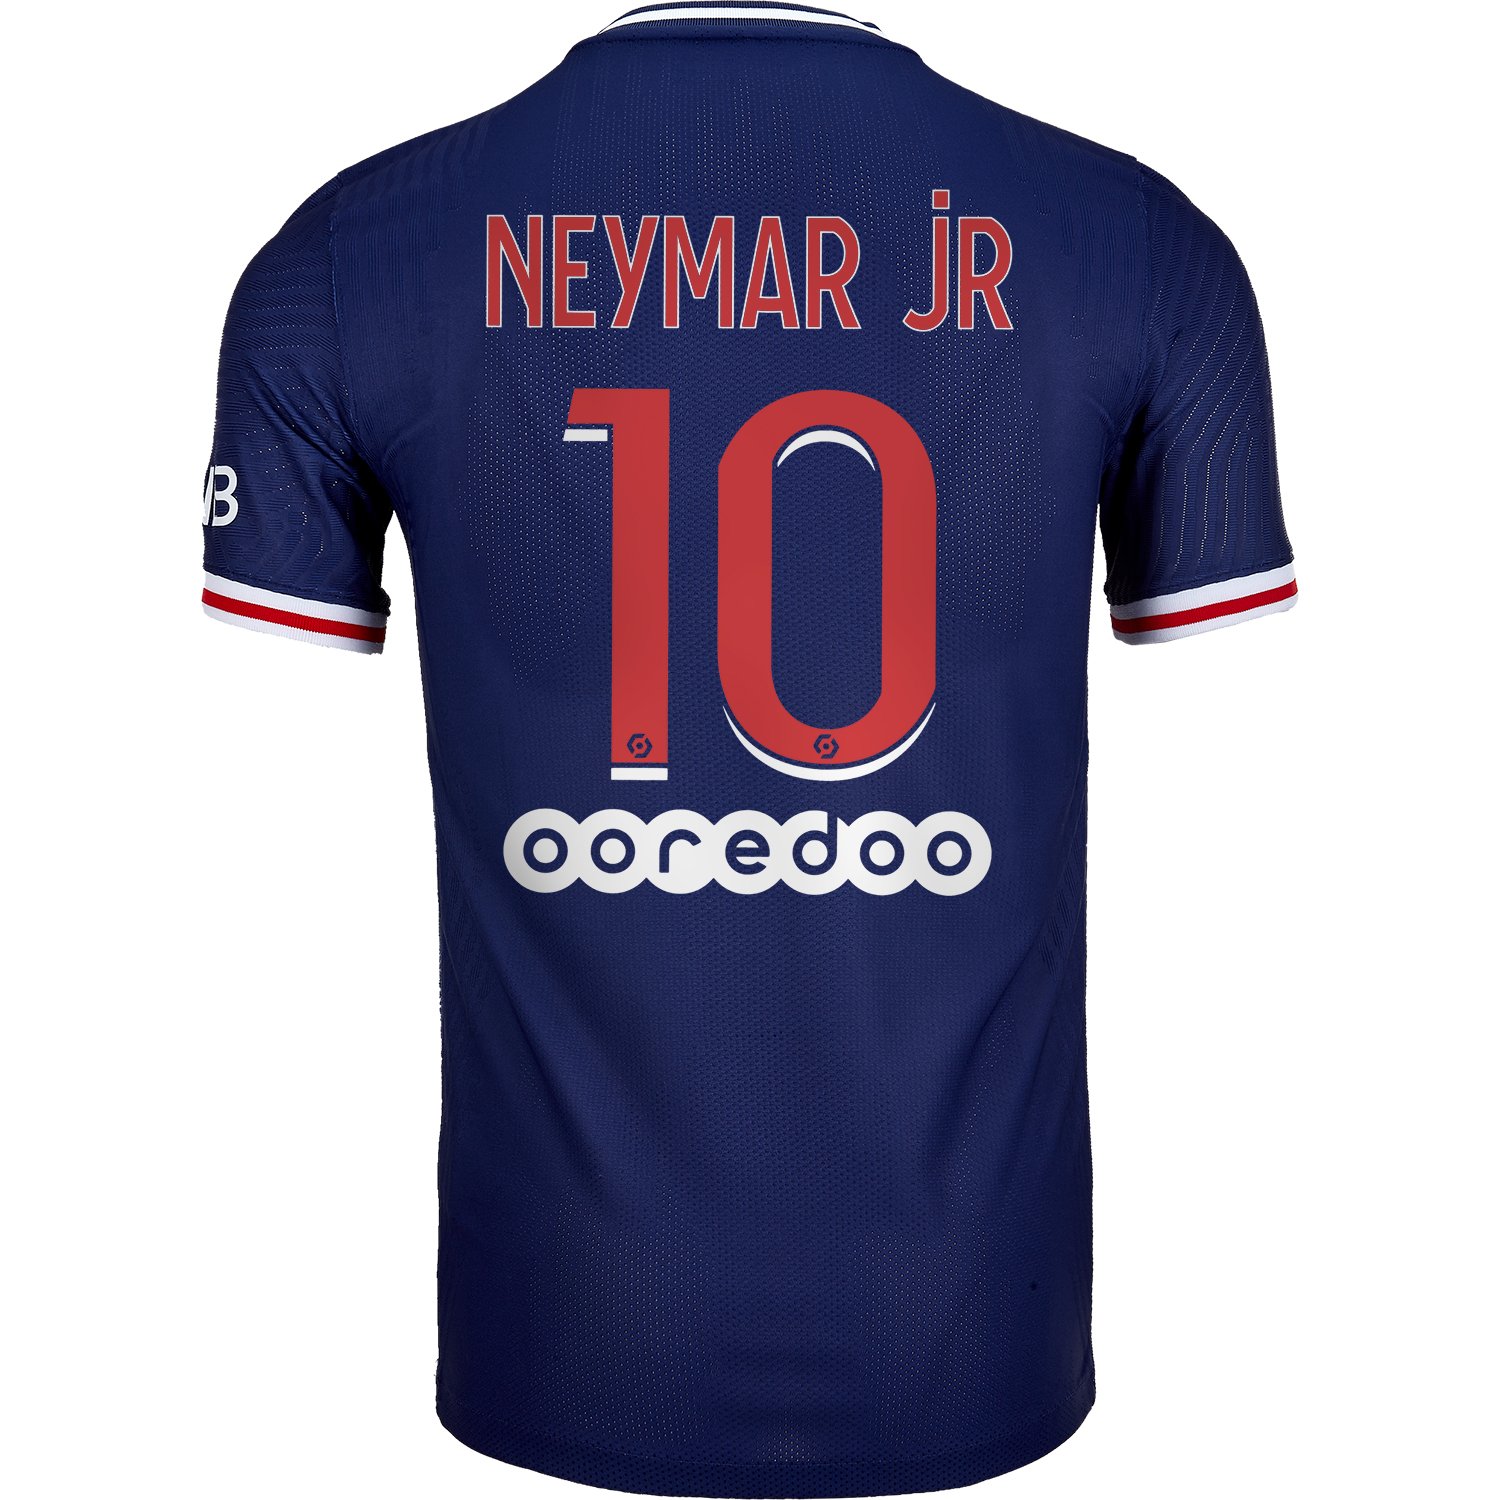 2020/21 Nike Neymar Jr PSG Home Match Jersey  SoccerPro